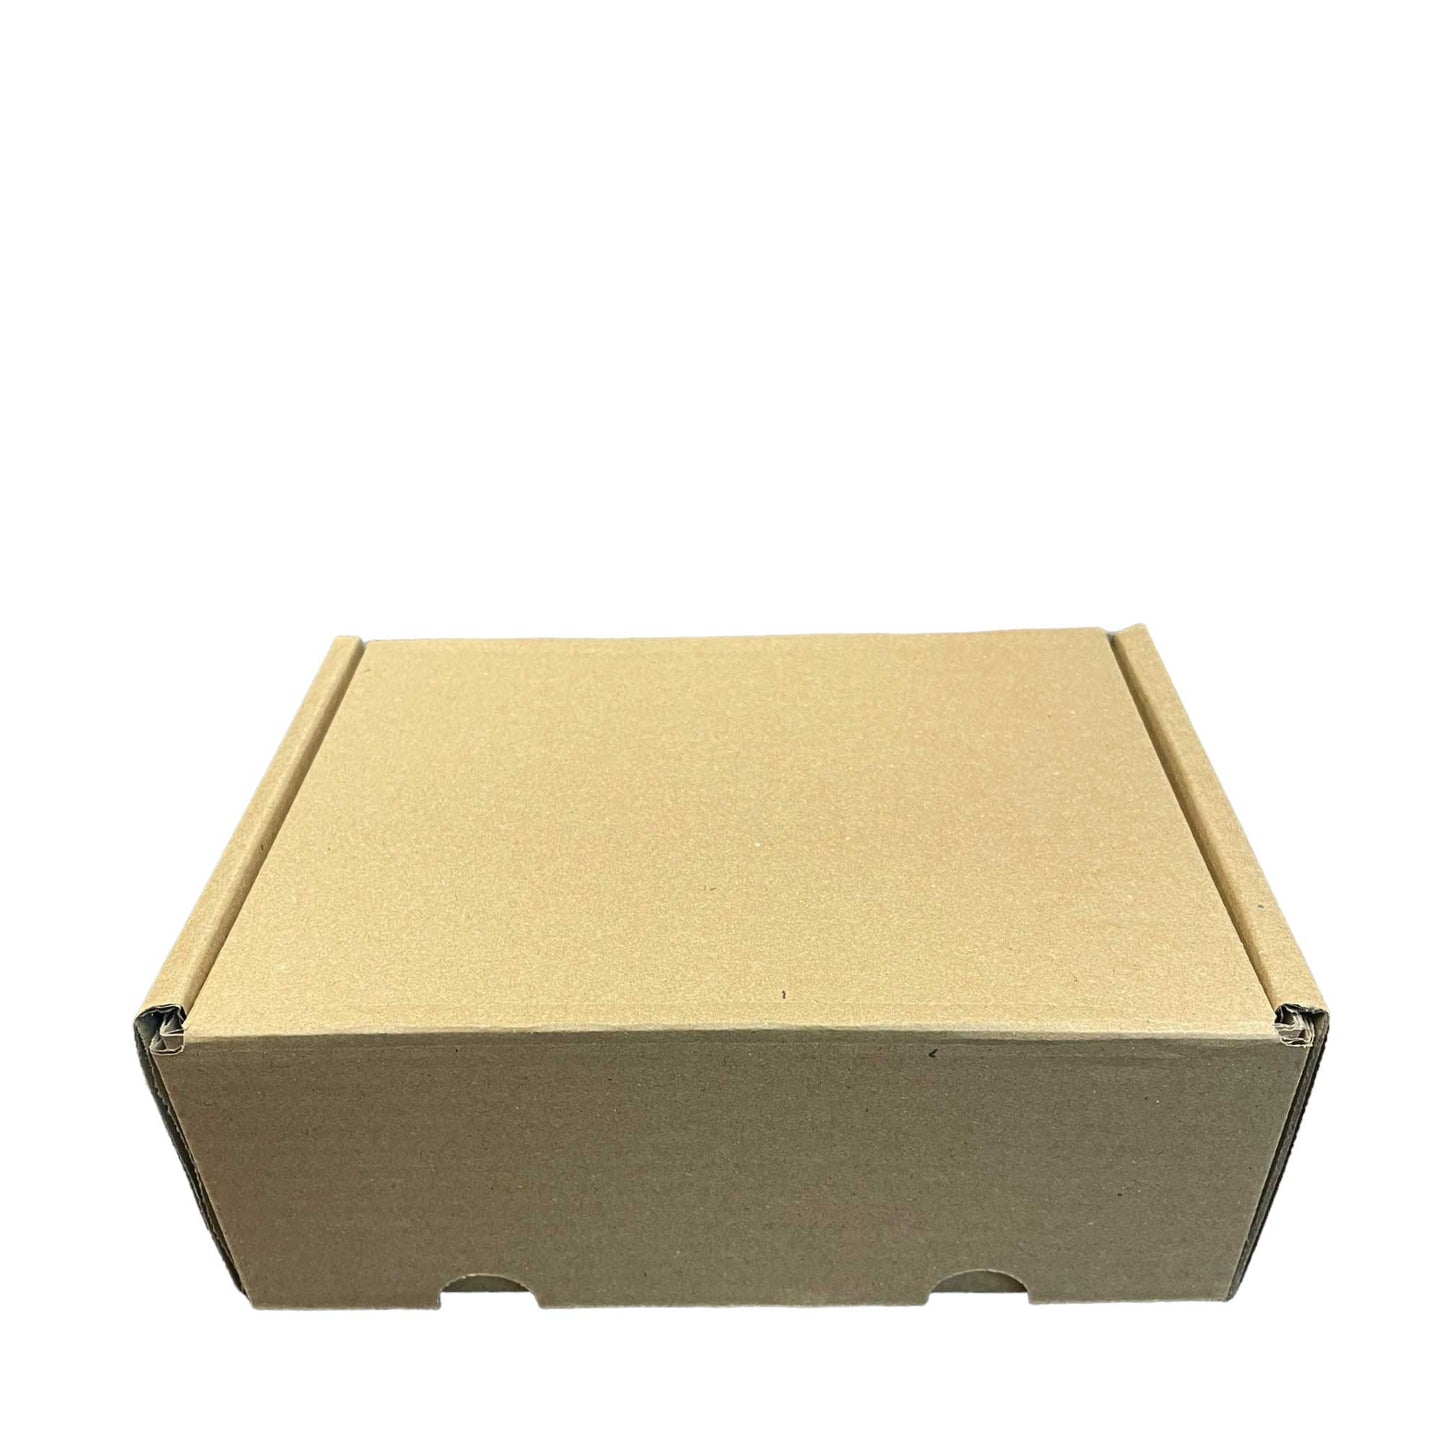 25x Die Cut Cardboard Boxes - 306x236x140mm Packaging Shipping Carton